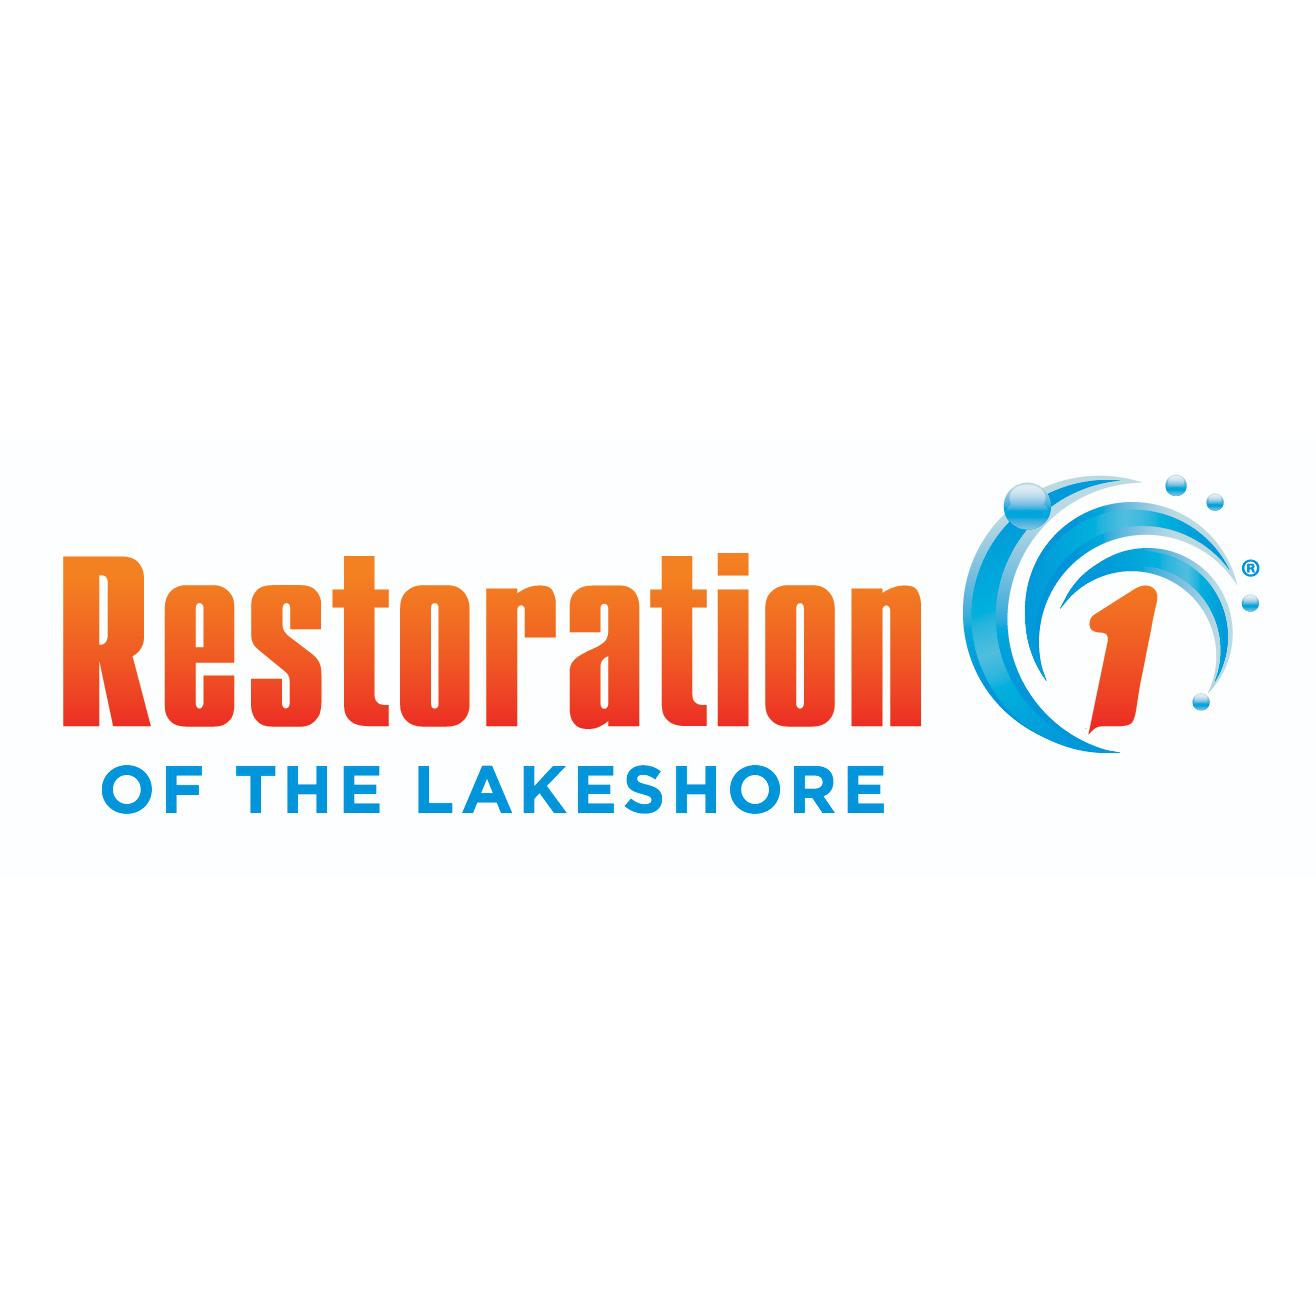 Restoration 1 of The Lakeshore